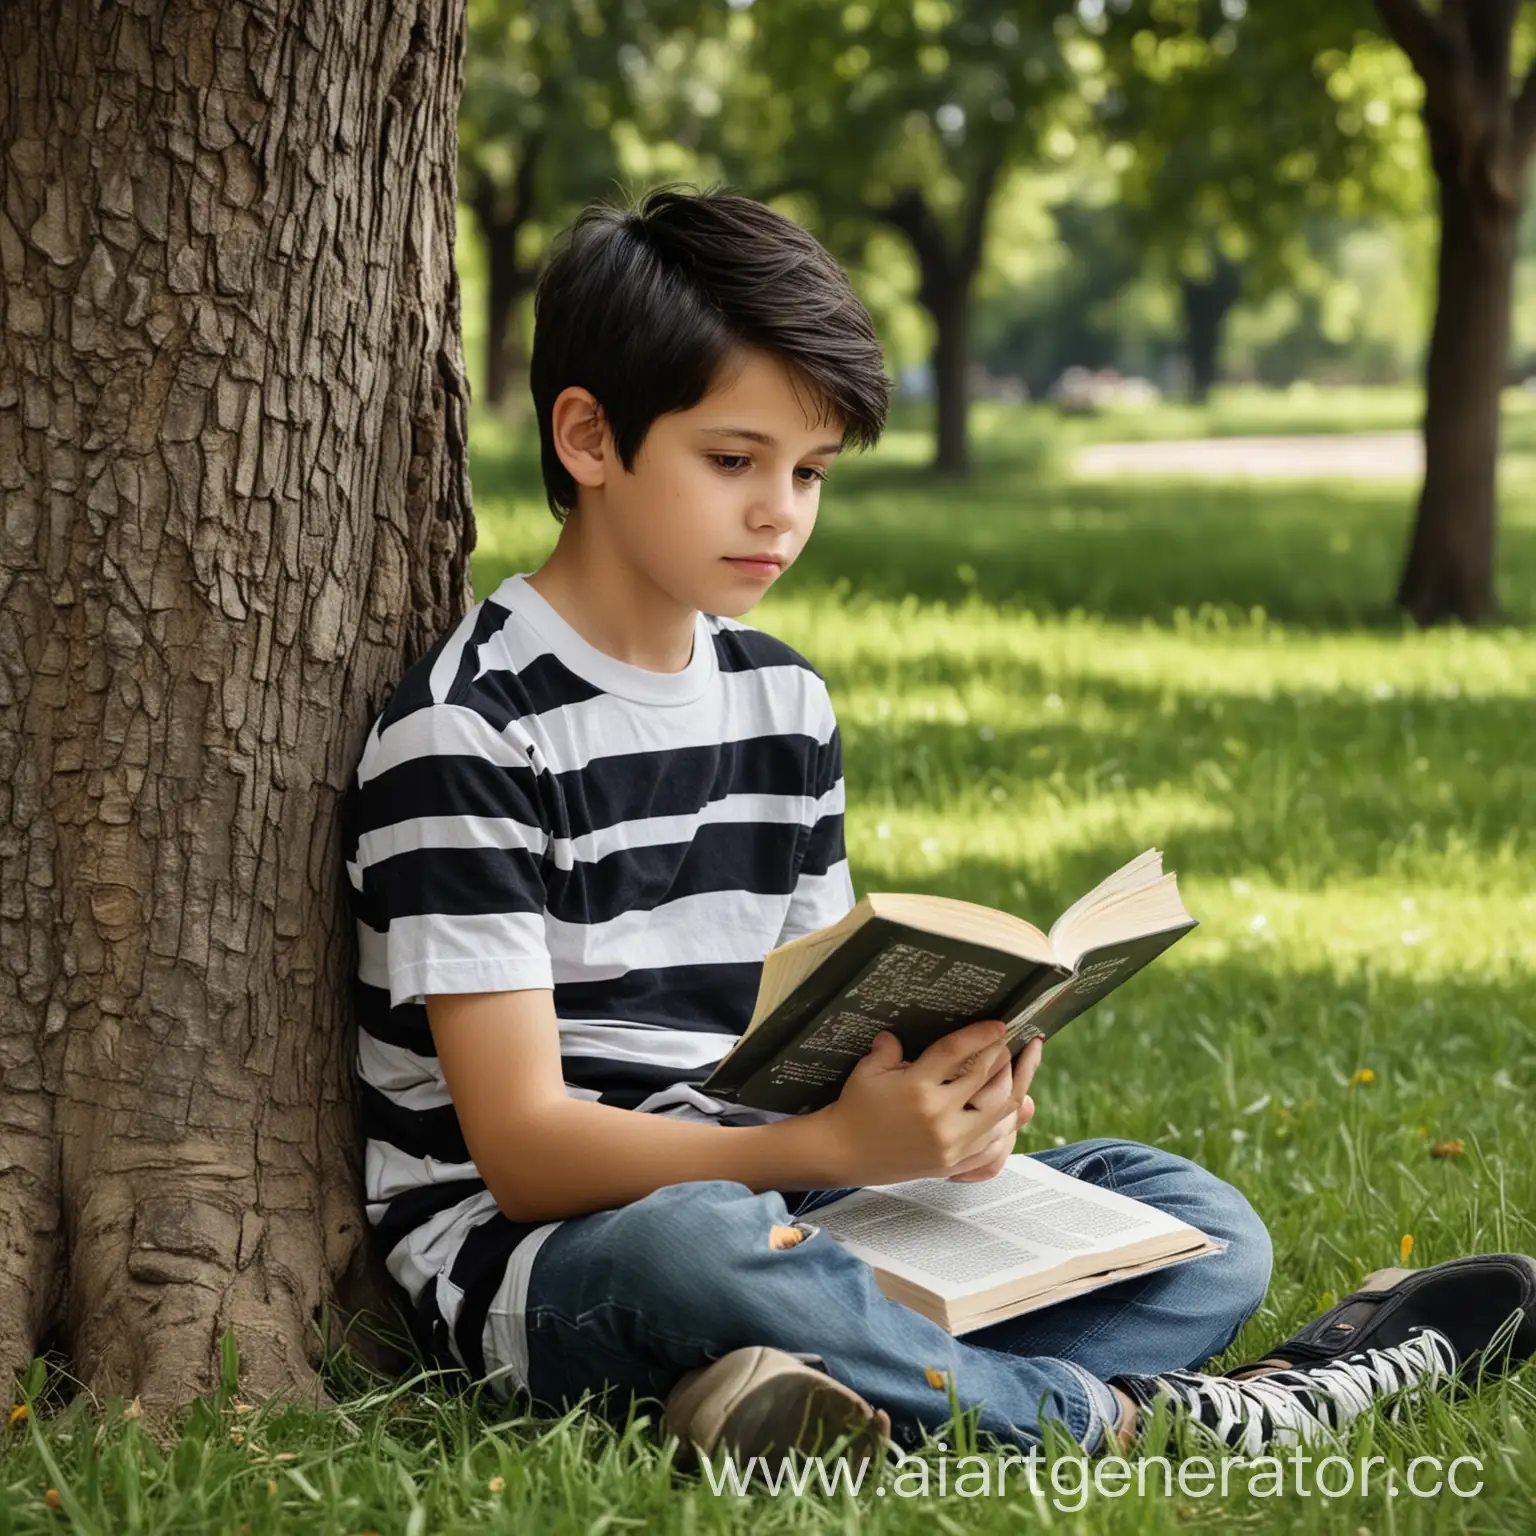 Teen-Boy-Reading-Book-Under-Tree-in-Park